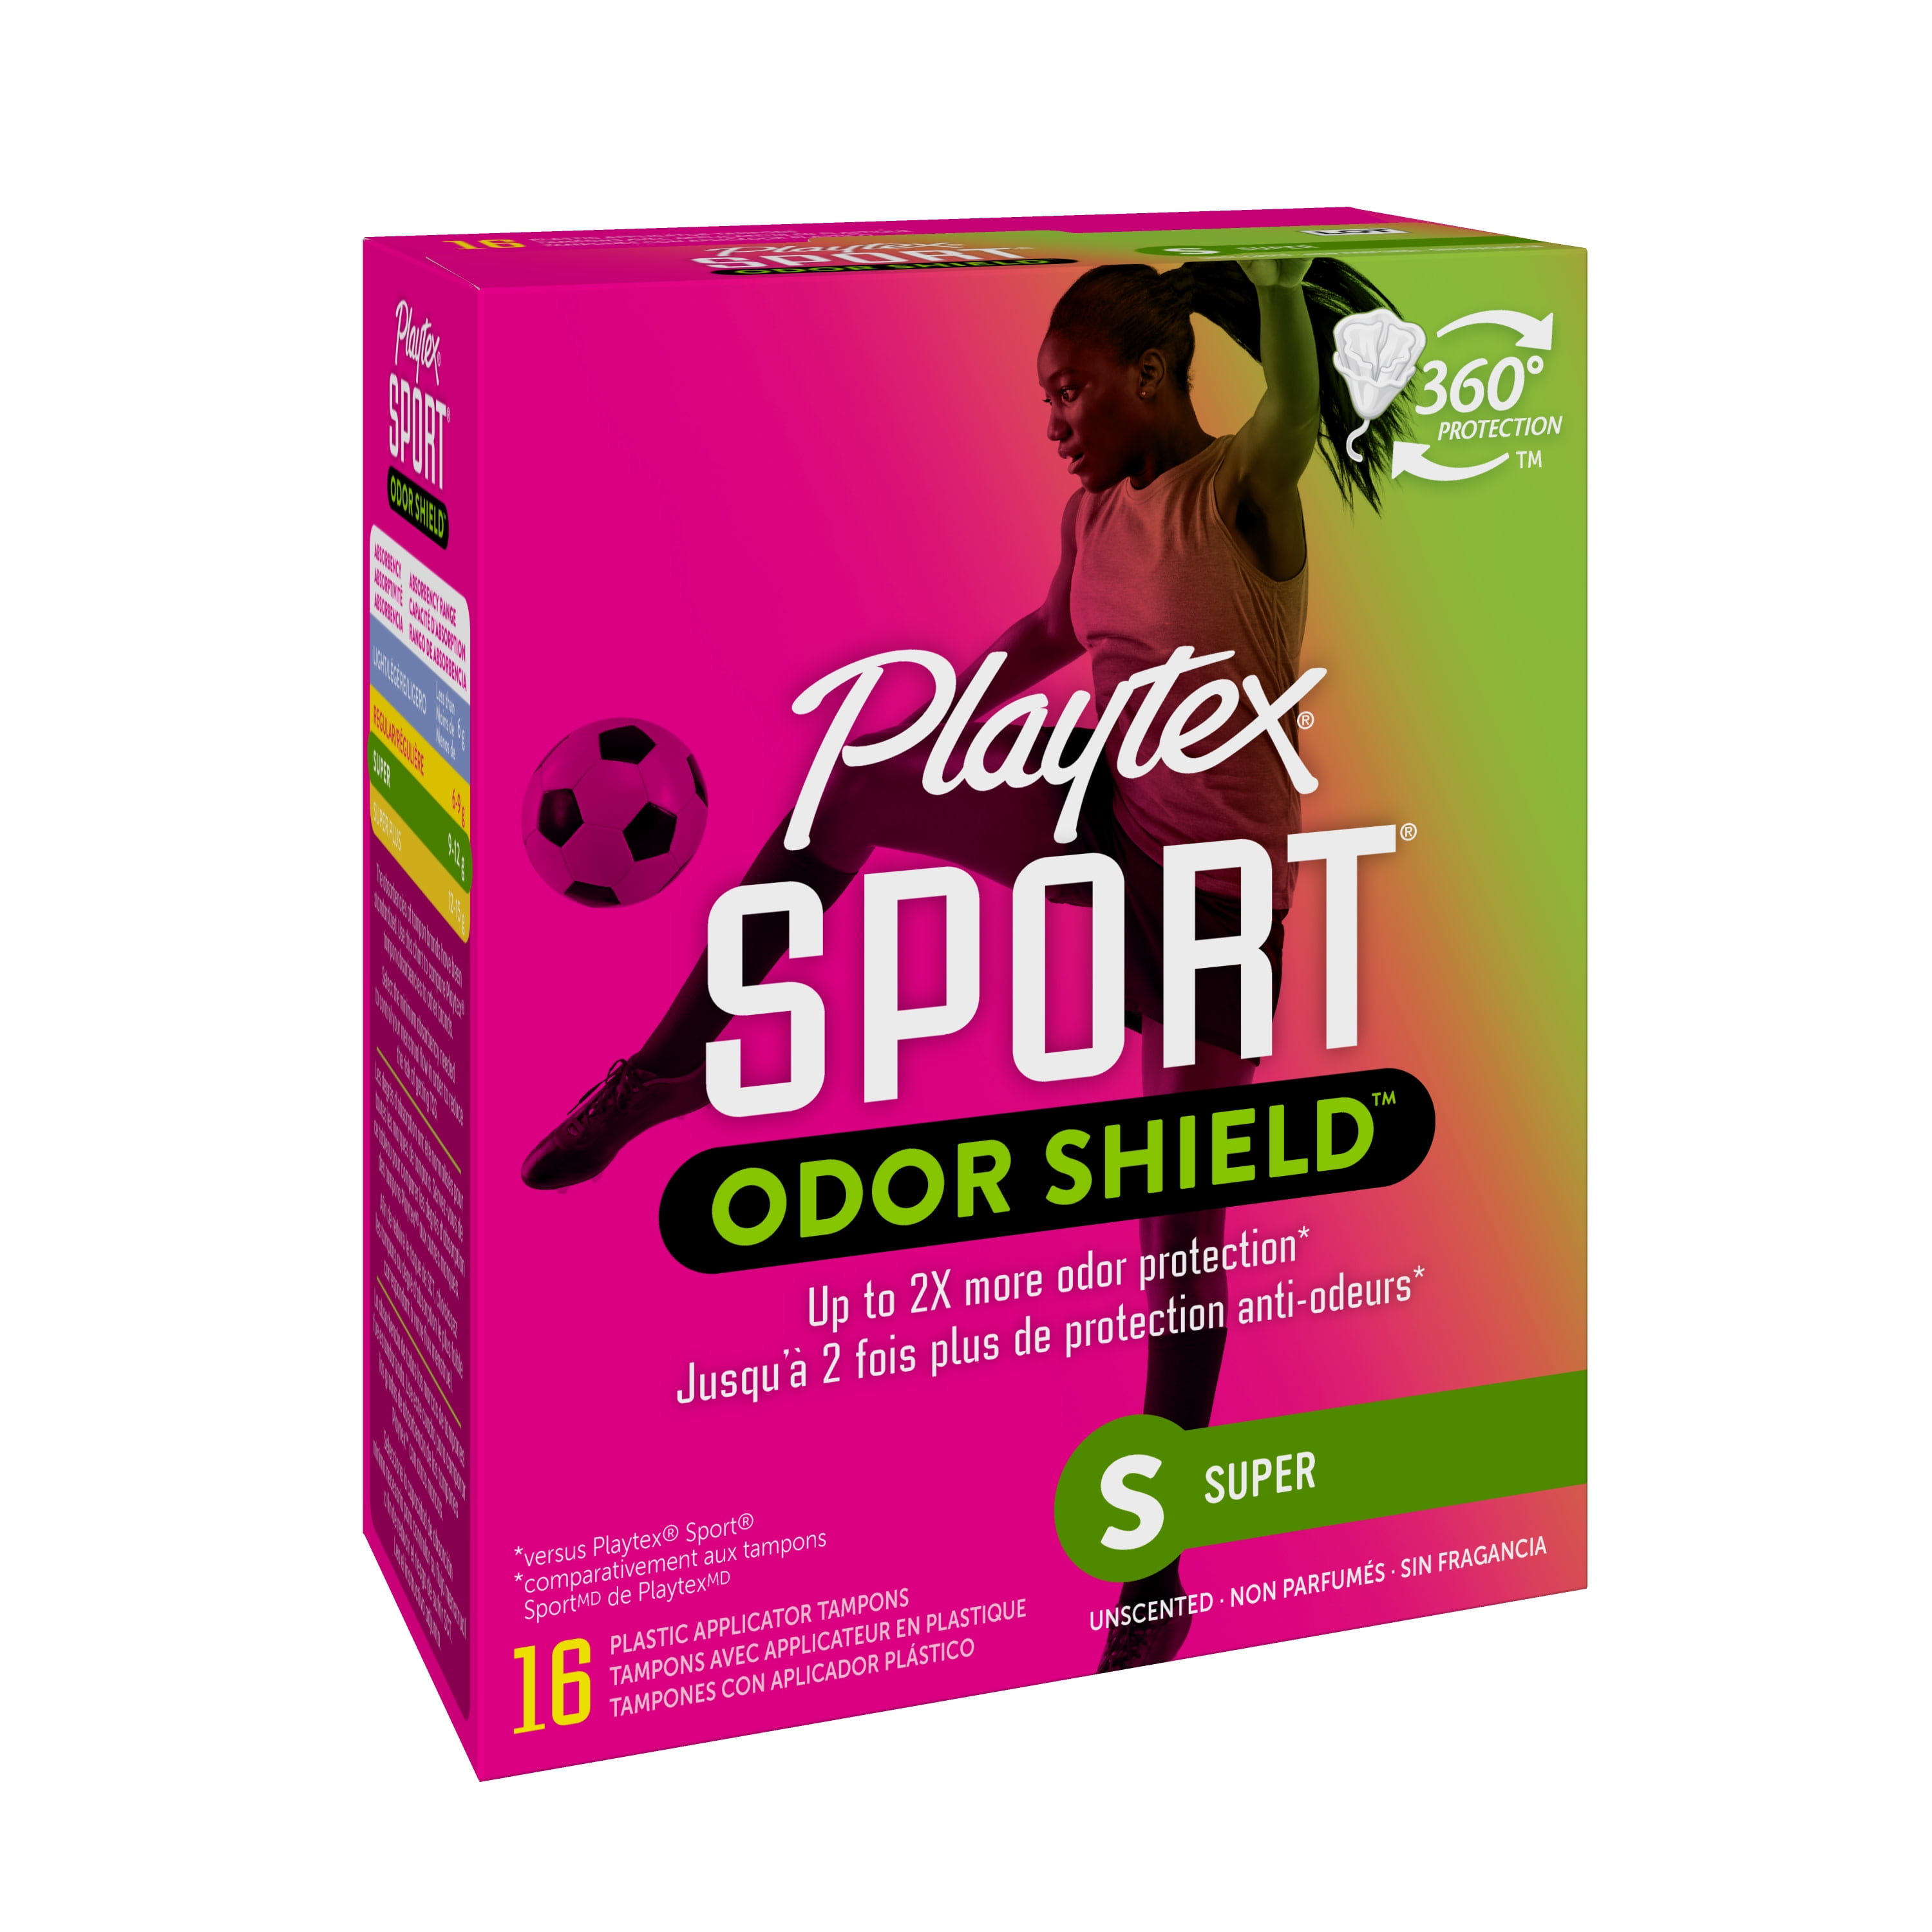 Playtex Sport Super Plastic Applicator Tampons, 36 Ct, 360 Degree Sport  Level Period Protection, No-Slip Grip Applicator 